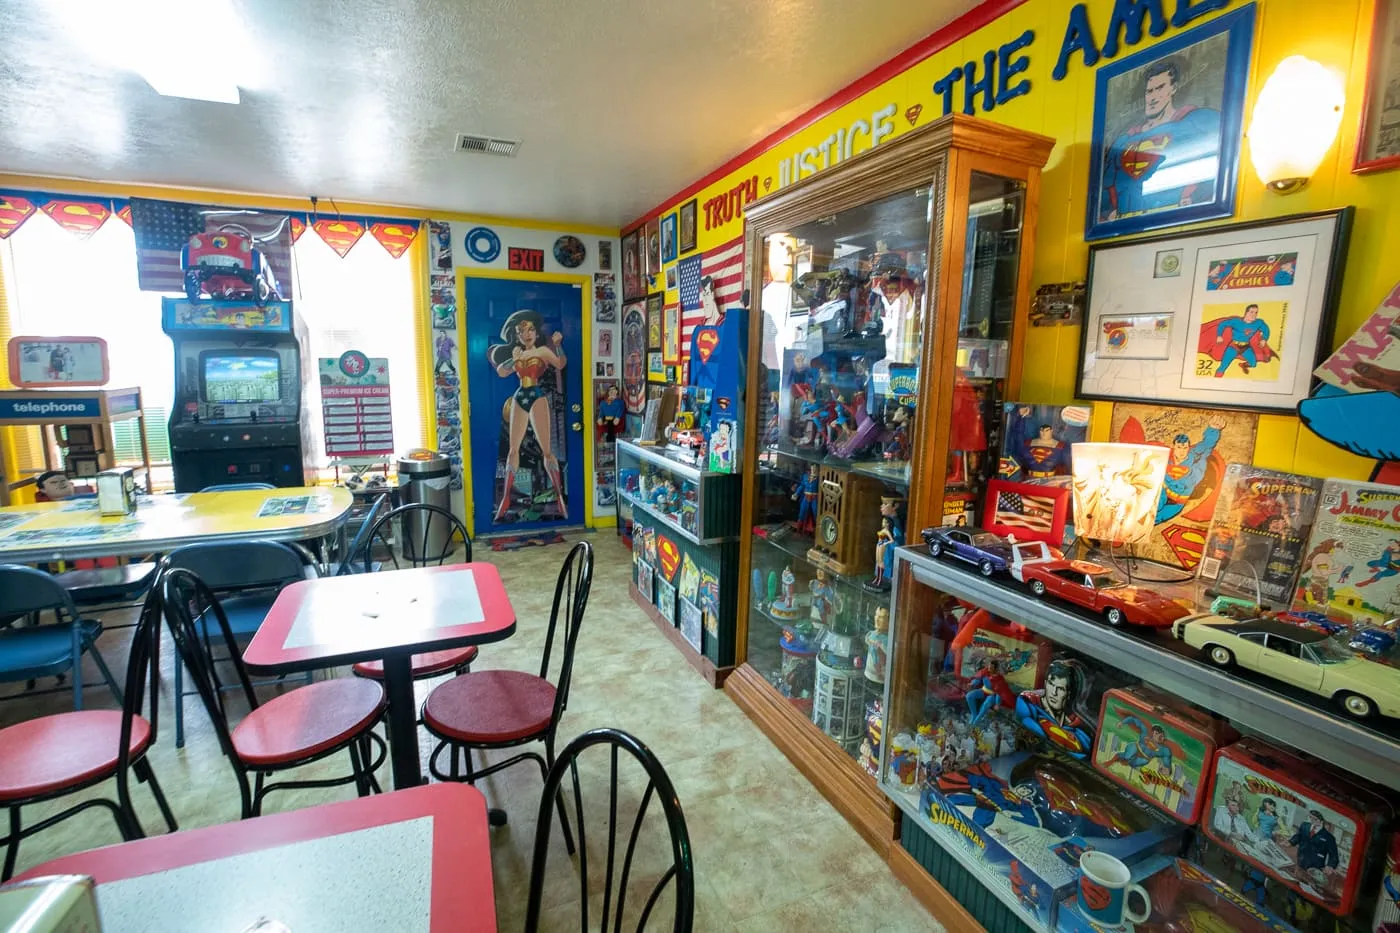 SuperTAM on 66 - Superman Museum & Ice Cream Parlor in Carterville, Missouri on Route 66